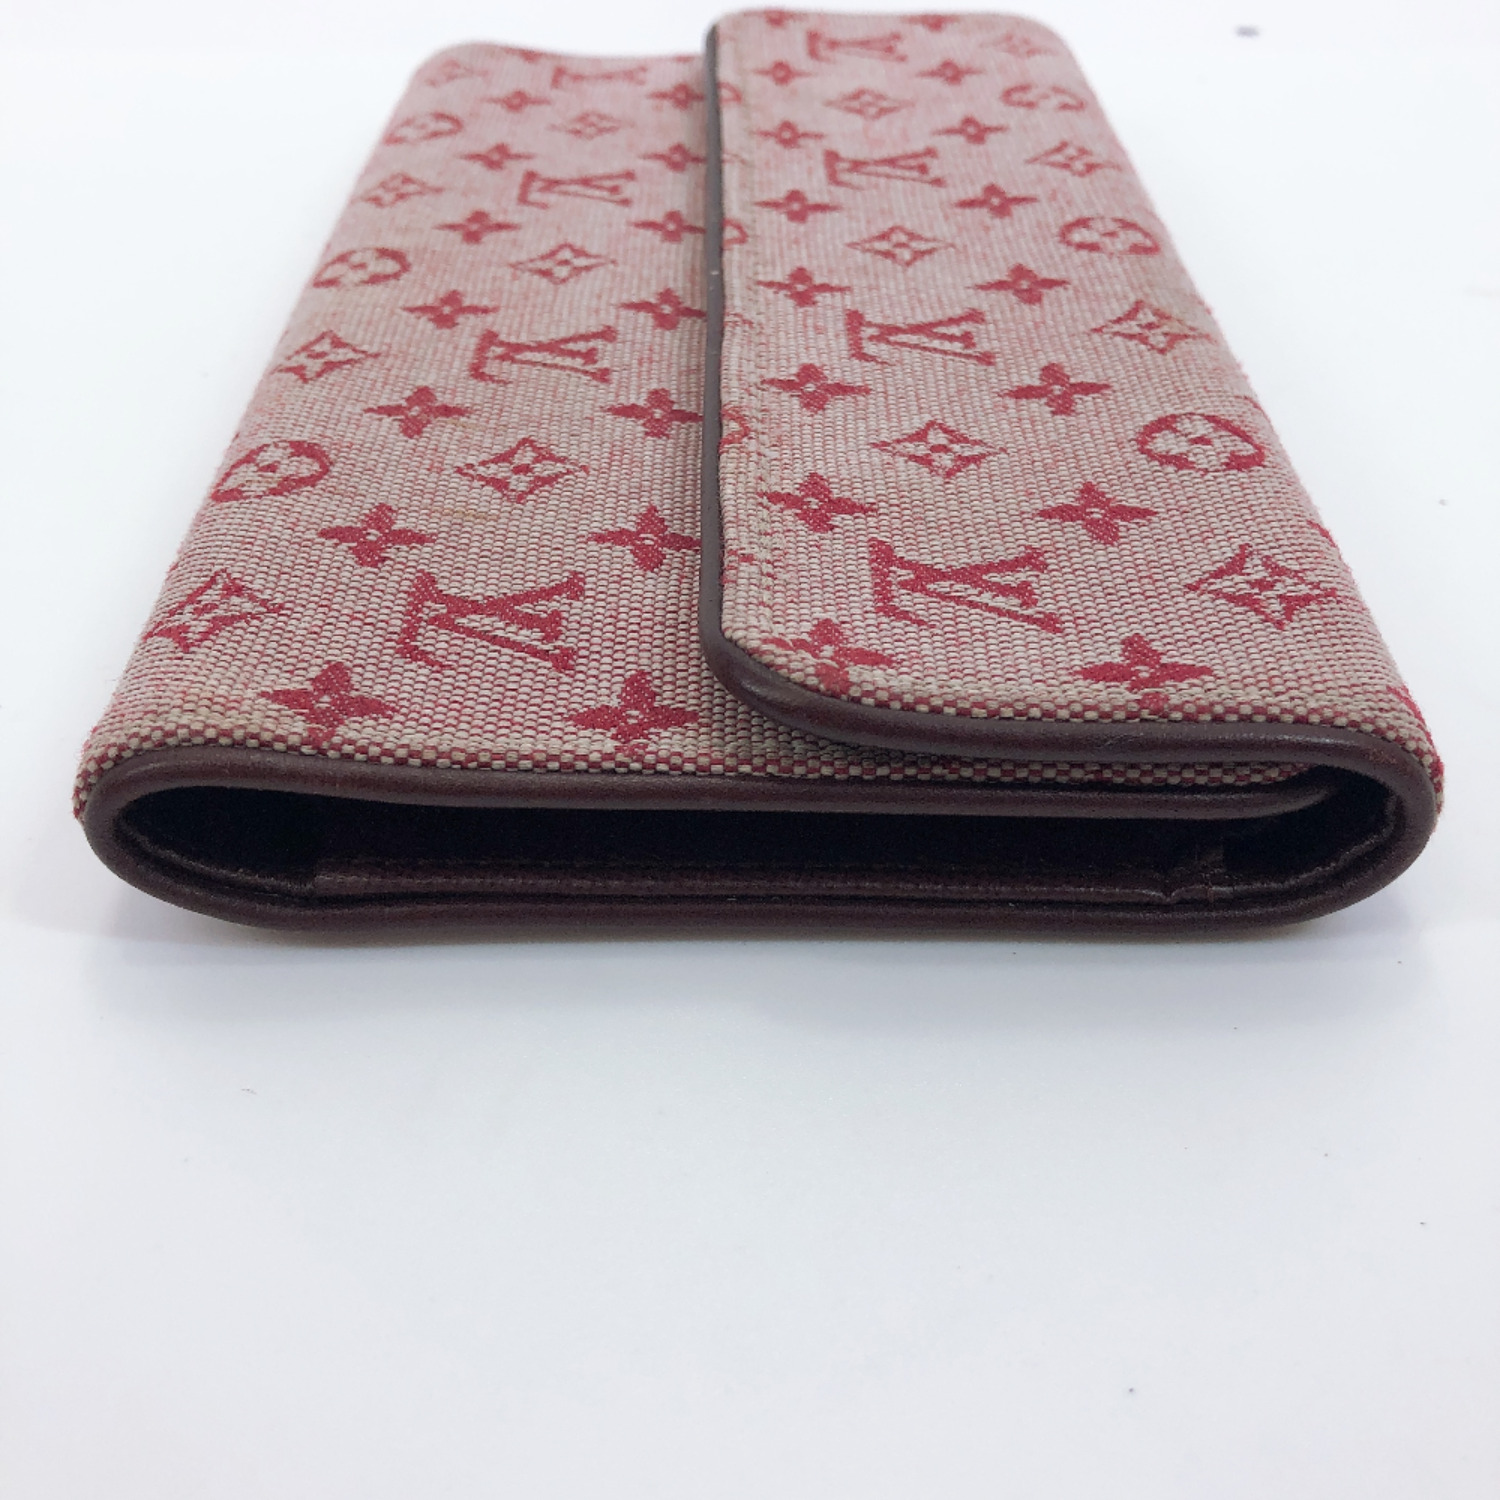 LOUIS VUITTON purse M92244 International Tri-fold wallet/Monogram mini | eBay